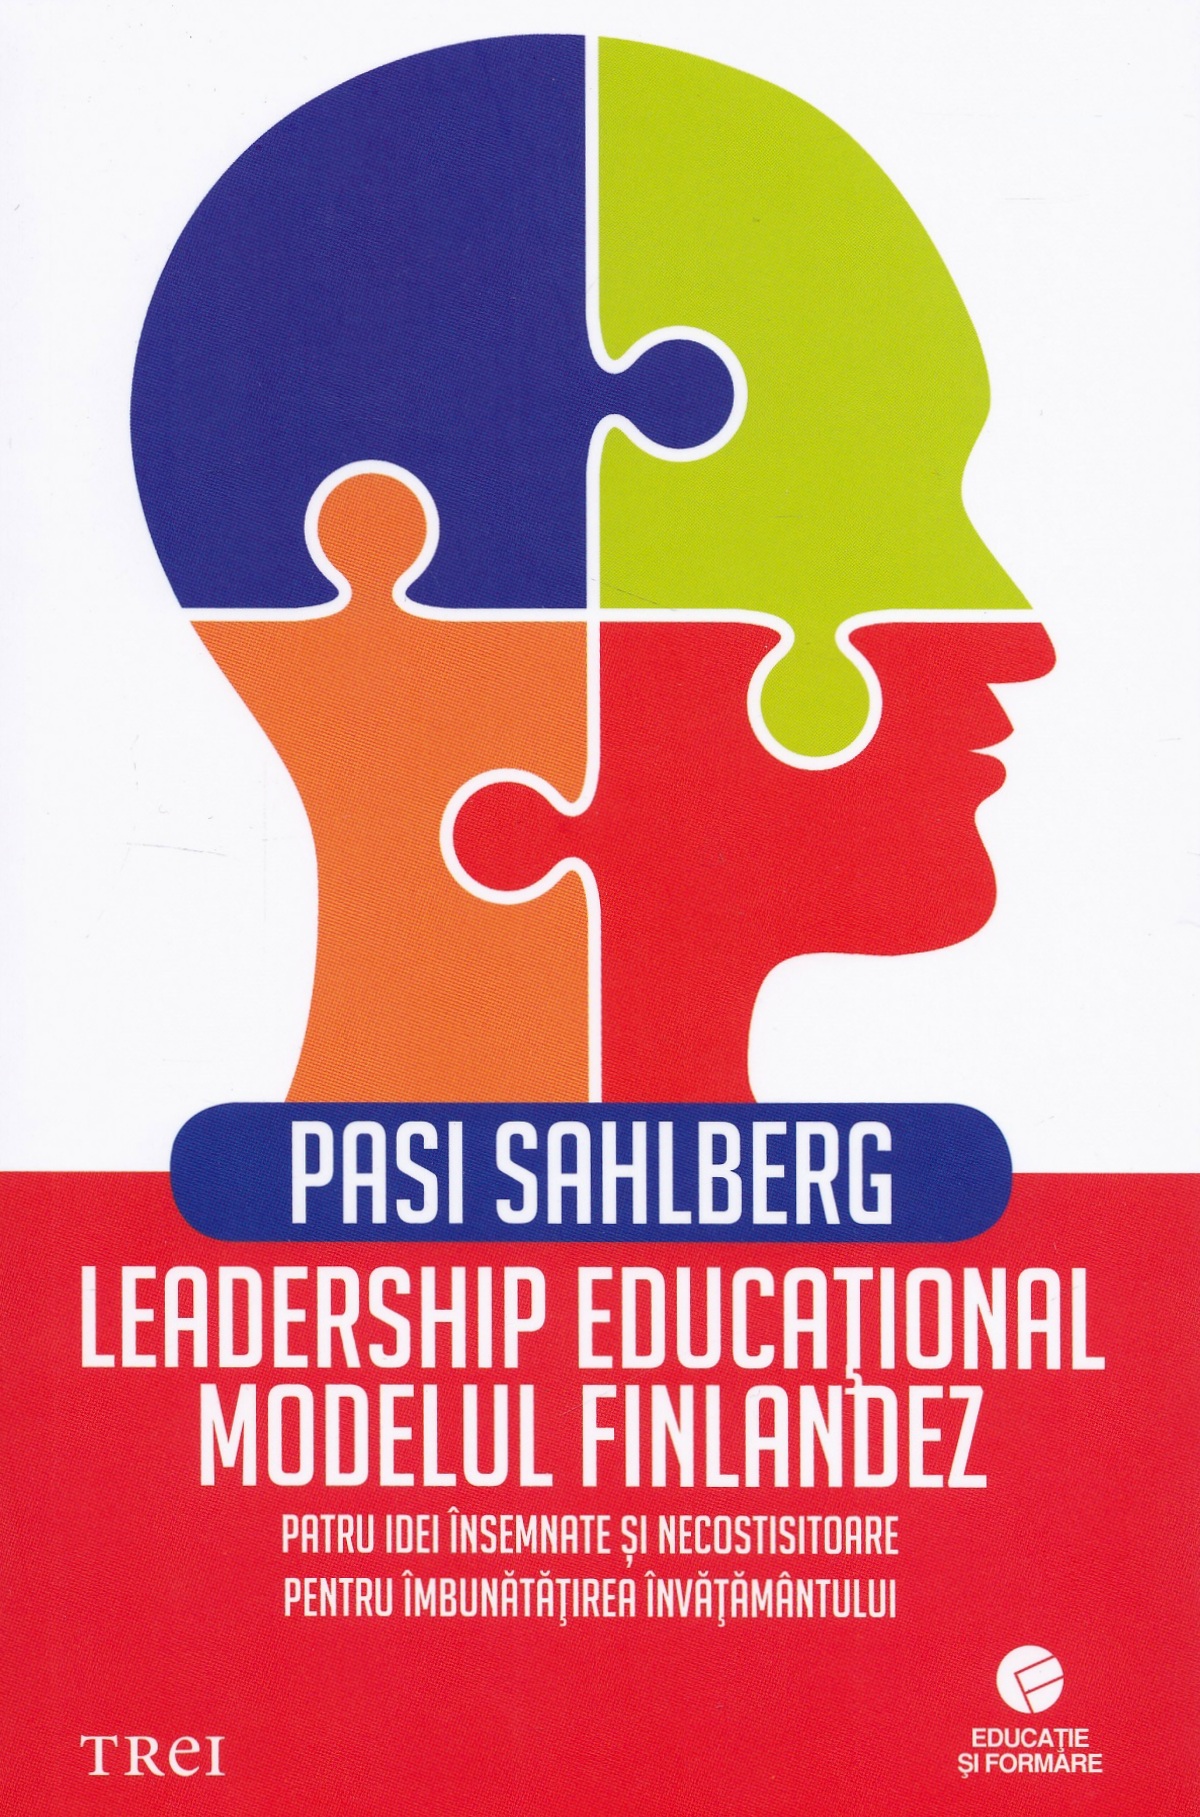 Leadership educational. Modelul finlandez - Pasi Sahlberg